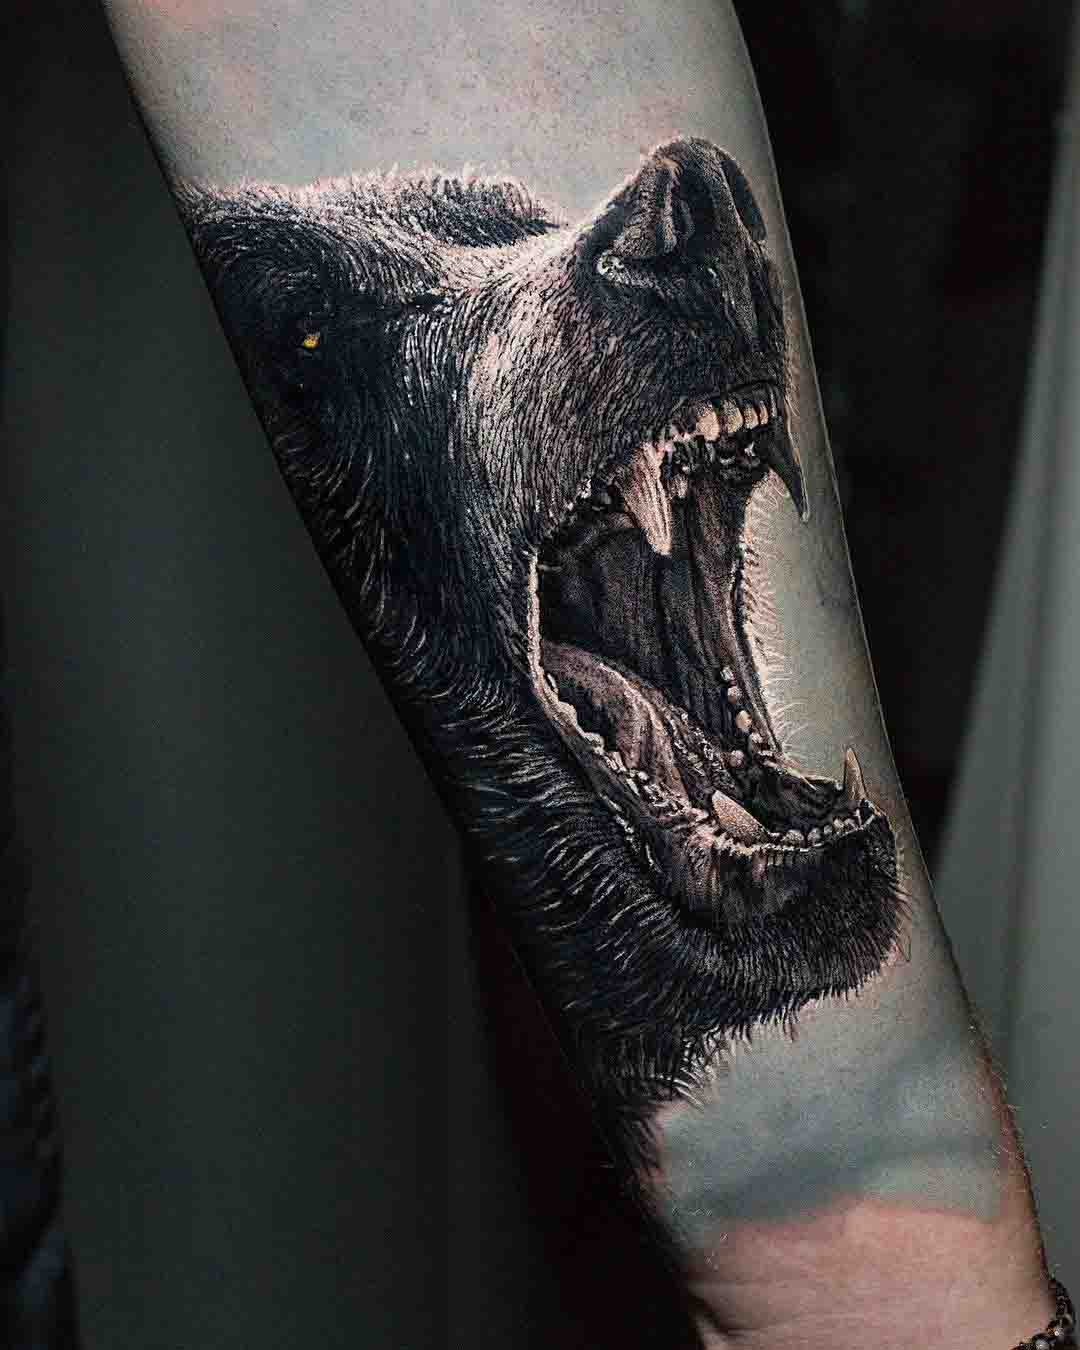 growling bear tattoo on arm